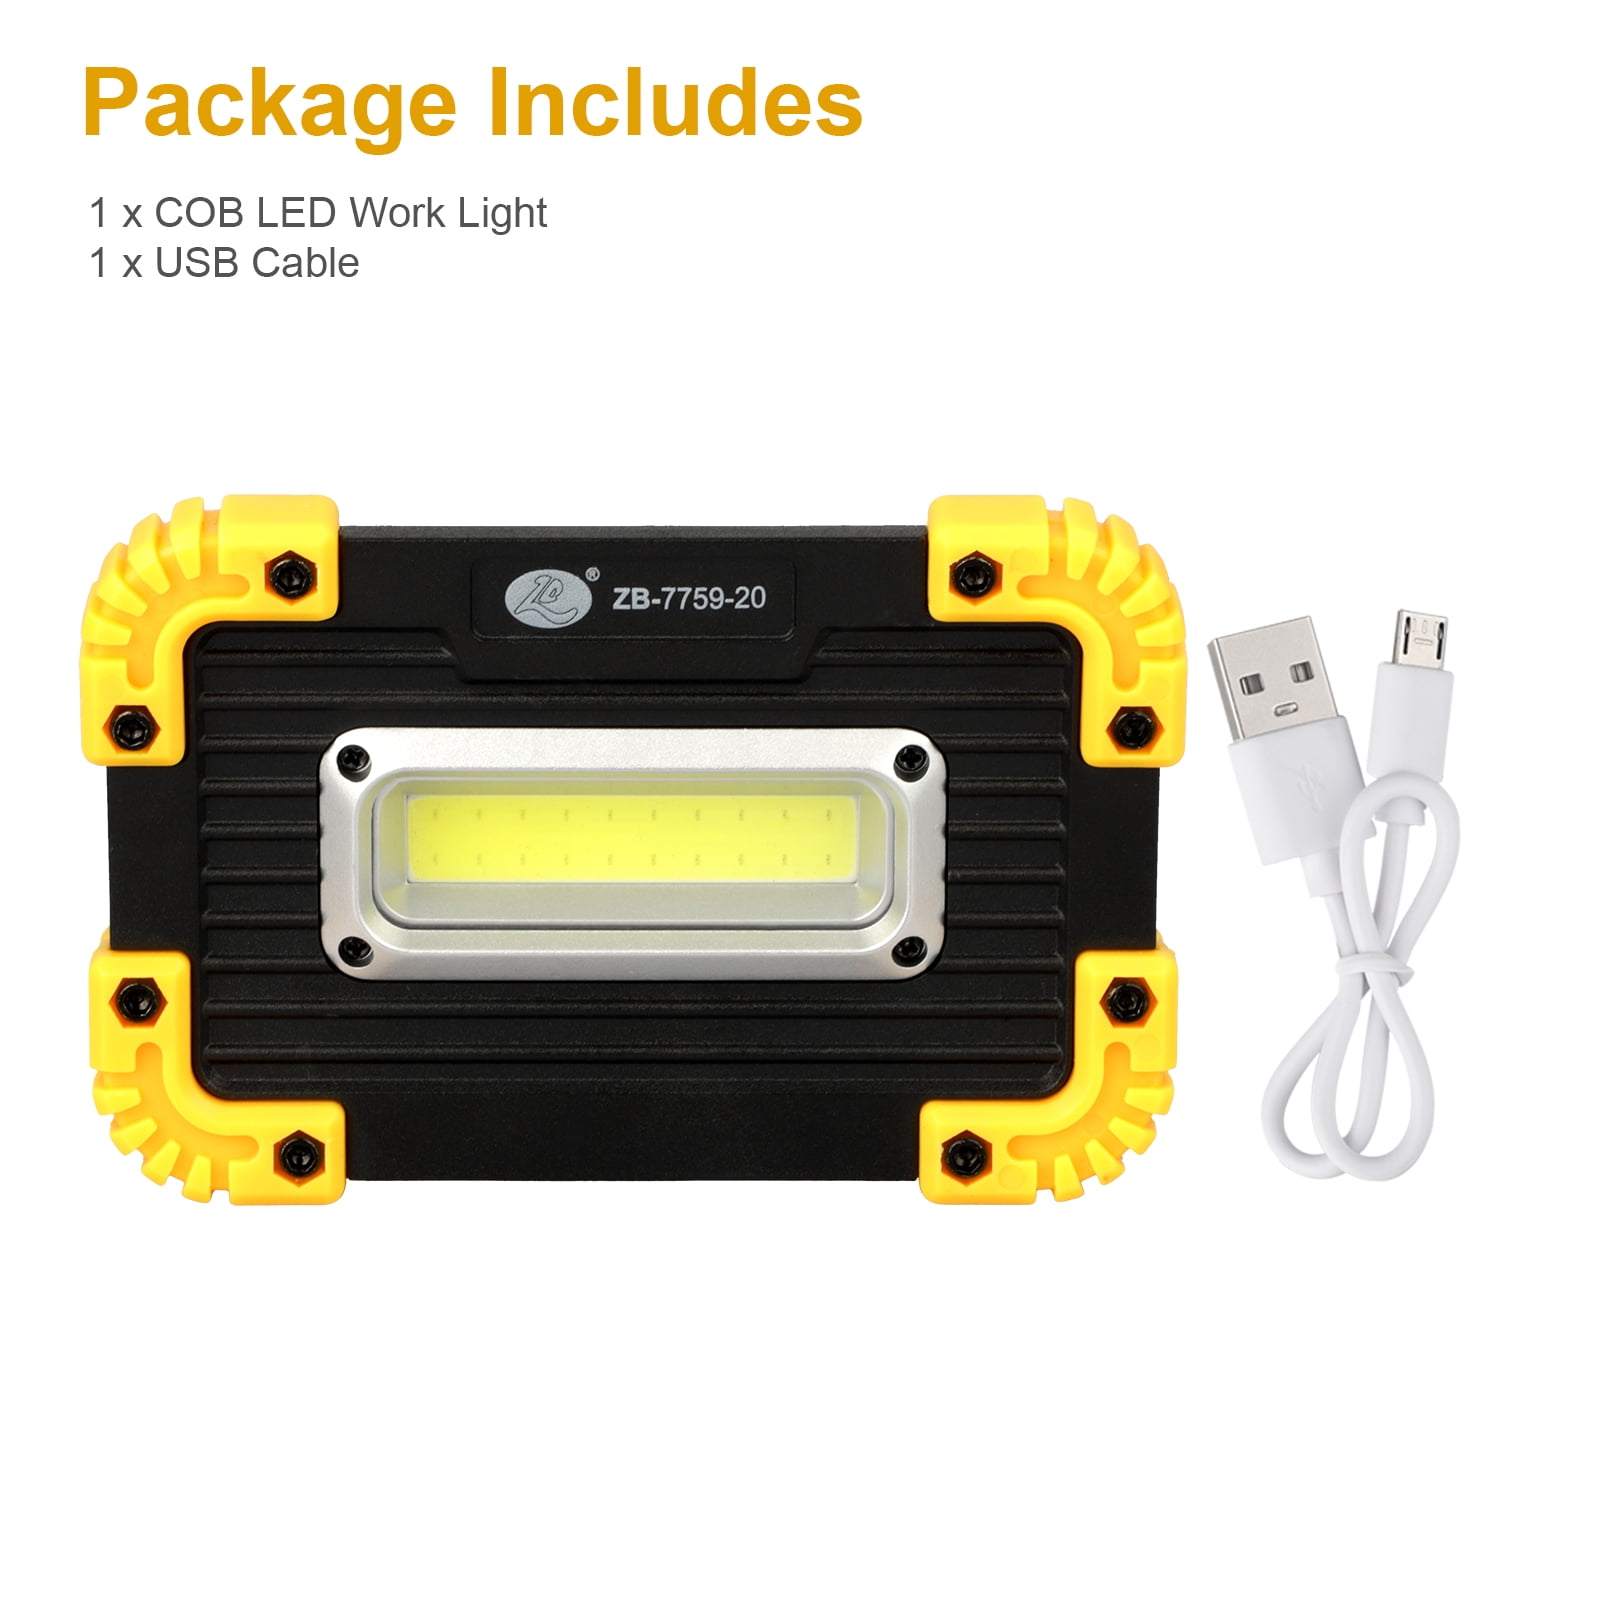 Lampe frontale COB LED 3W - rechargeable - Batterie Multi Services